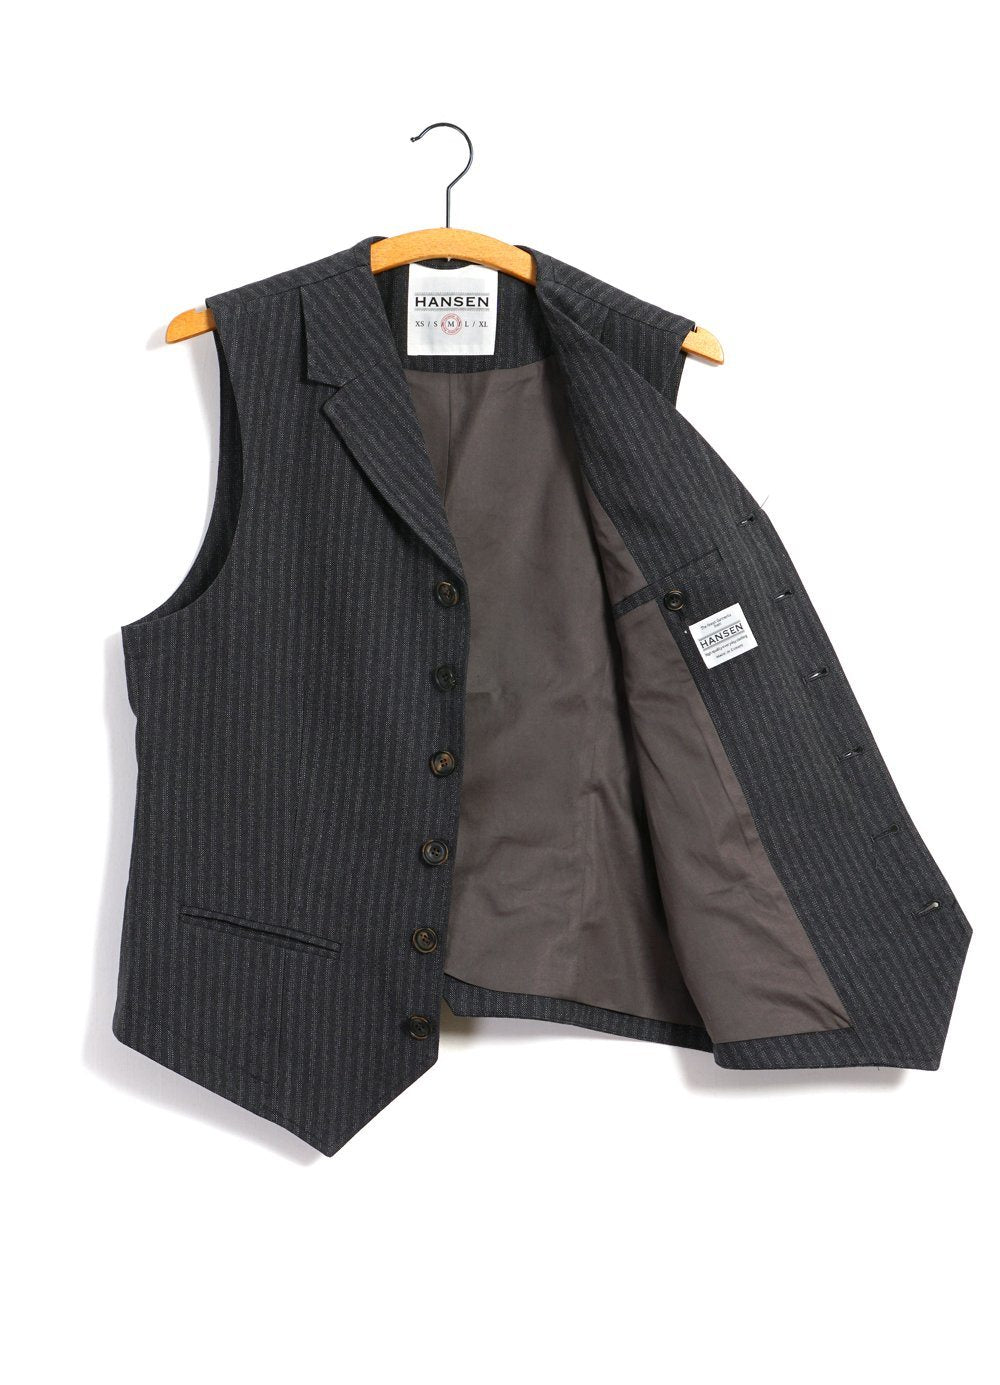 HANSEN GARMENTS - WILLIAM | Lapel Waistcoat | Grey Pin - HANSEN Garments